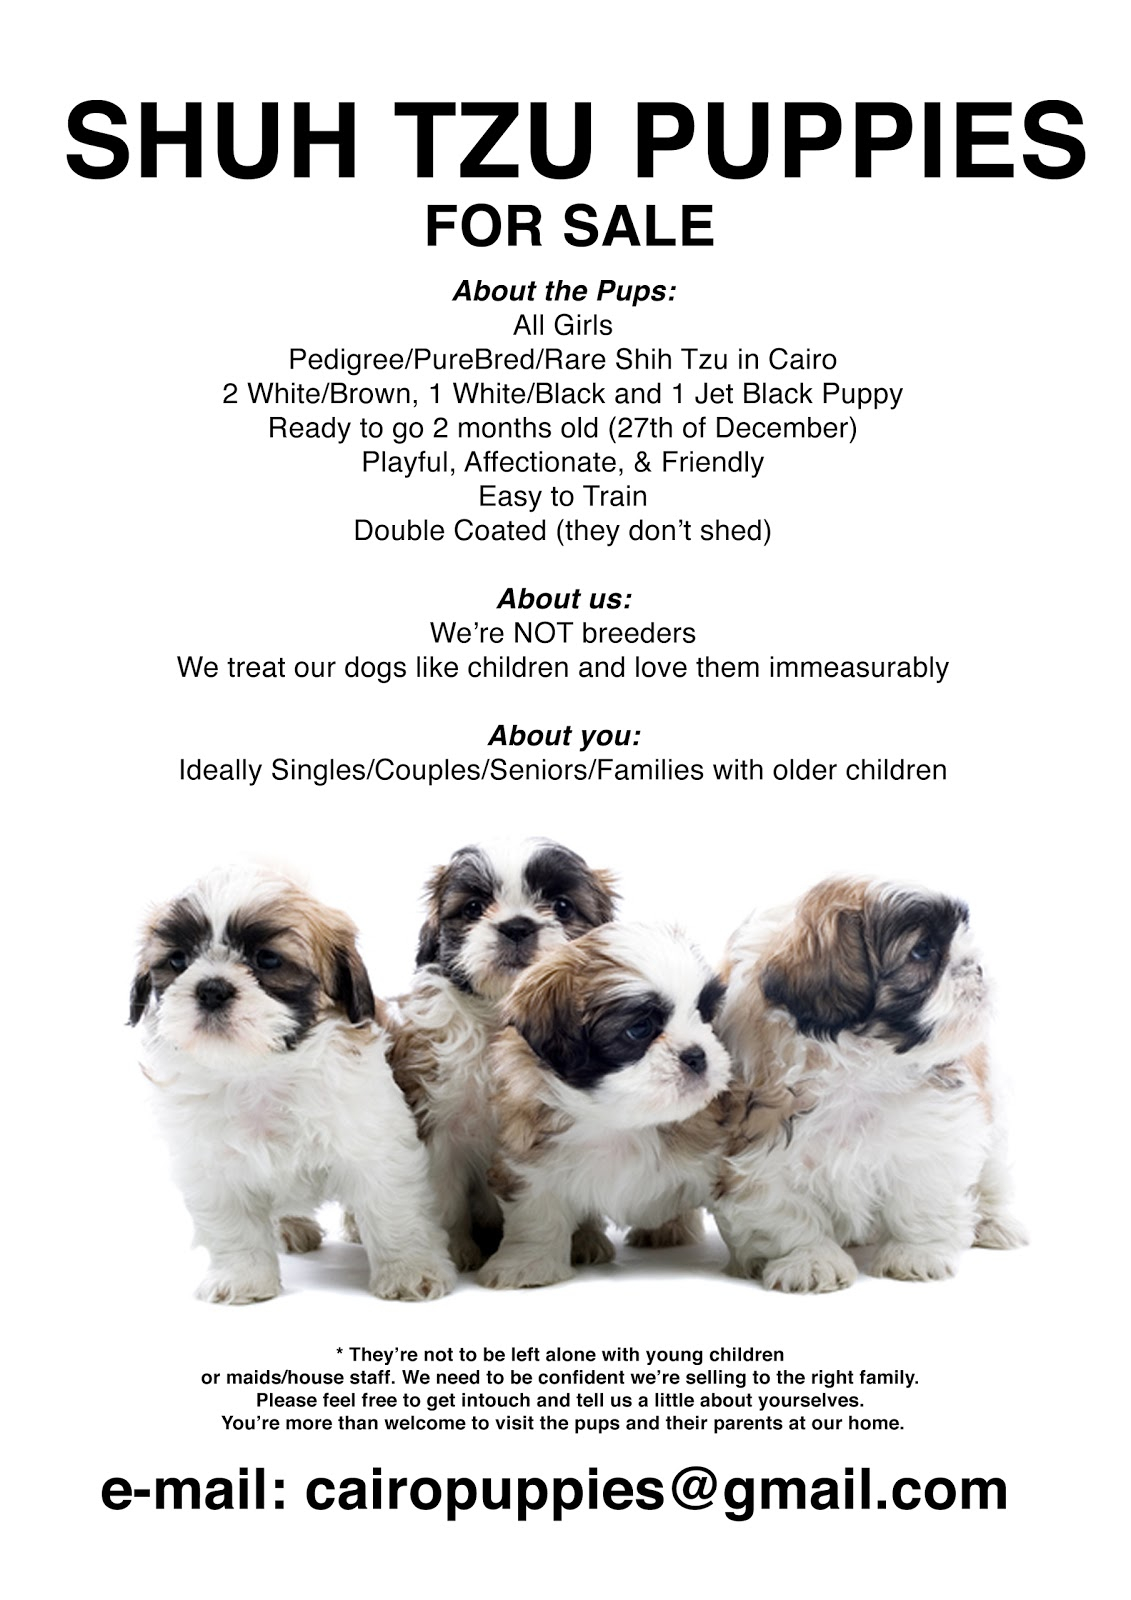 SHIH TZU PUPPIES FOR SALE: Flyer & Info Inside Puppies For Sale Flyer Template